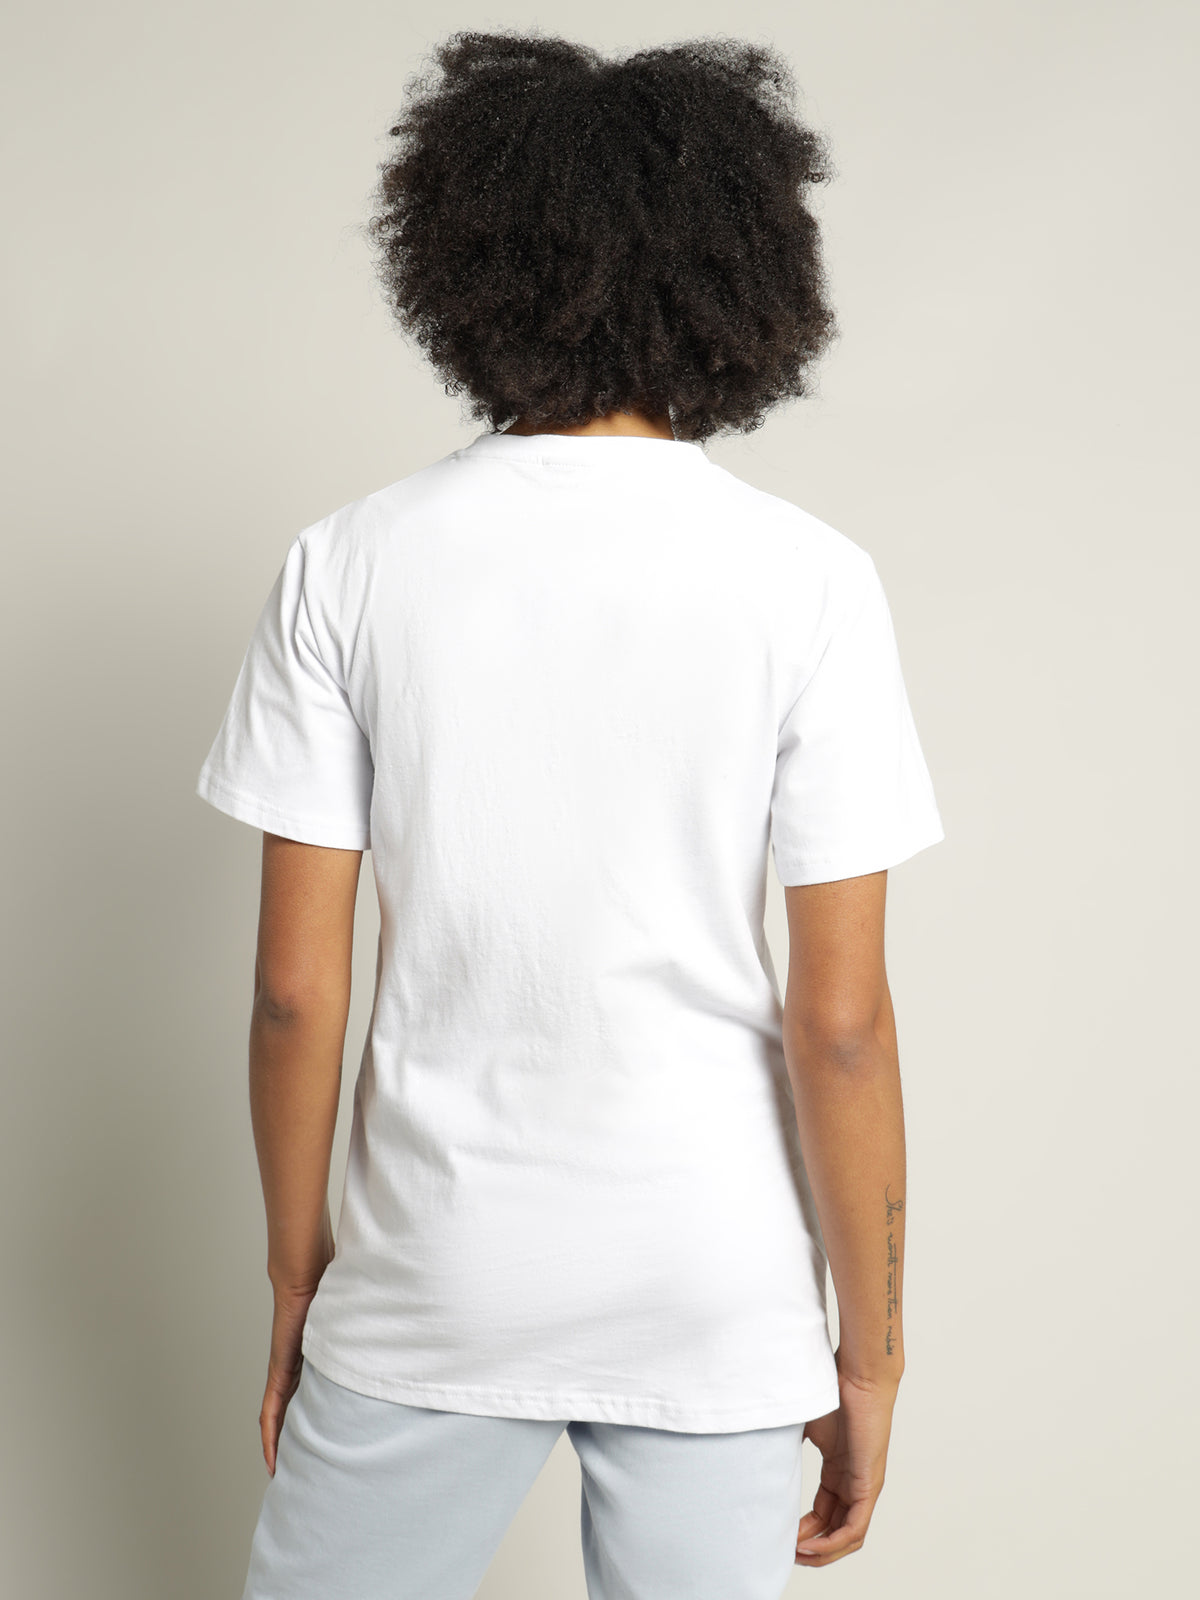 Tardi T-Shirt in White